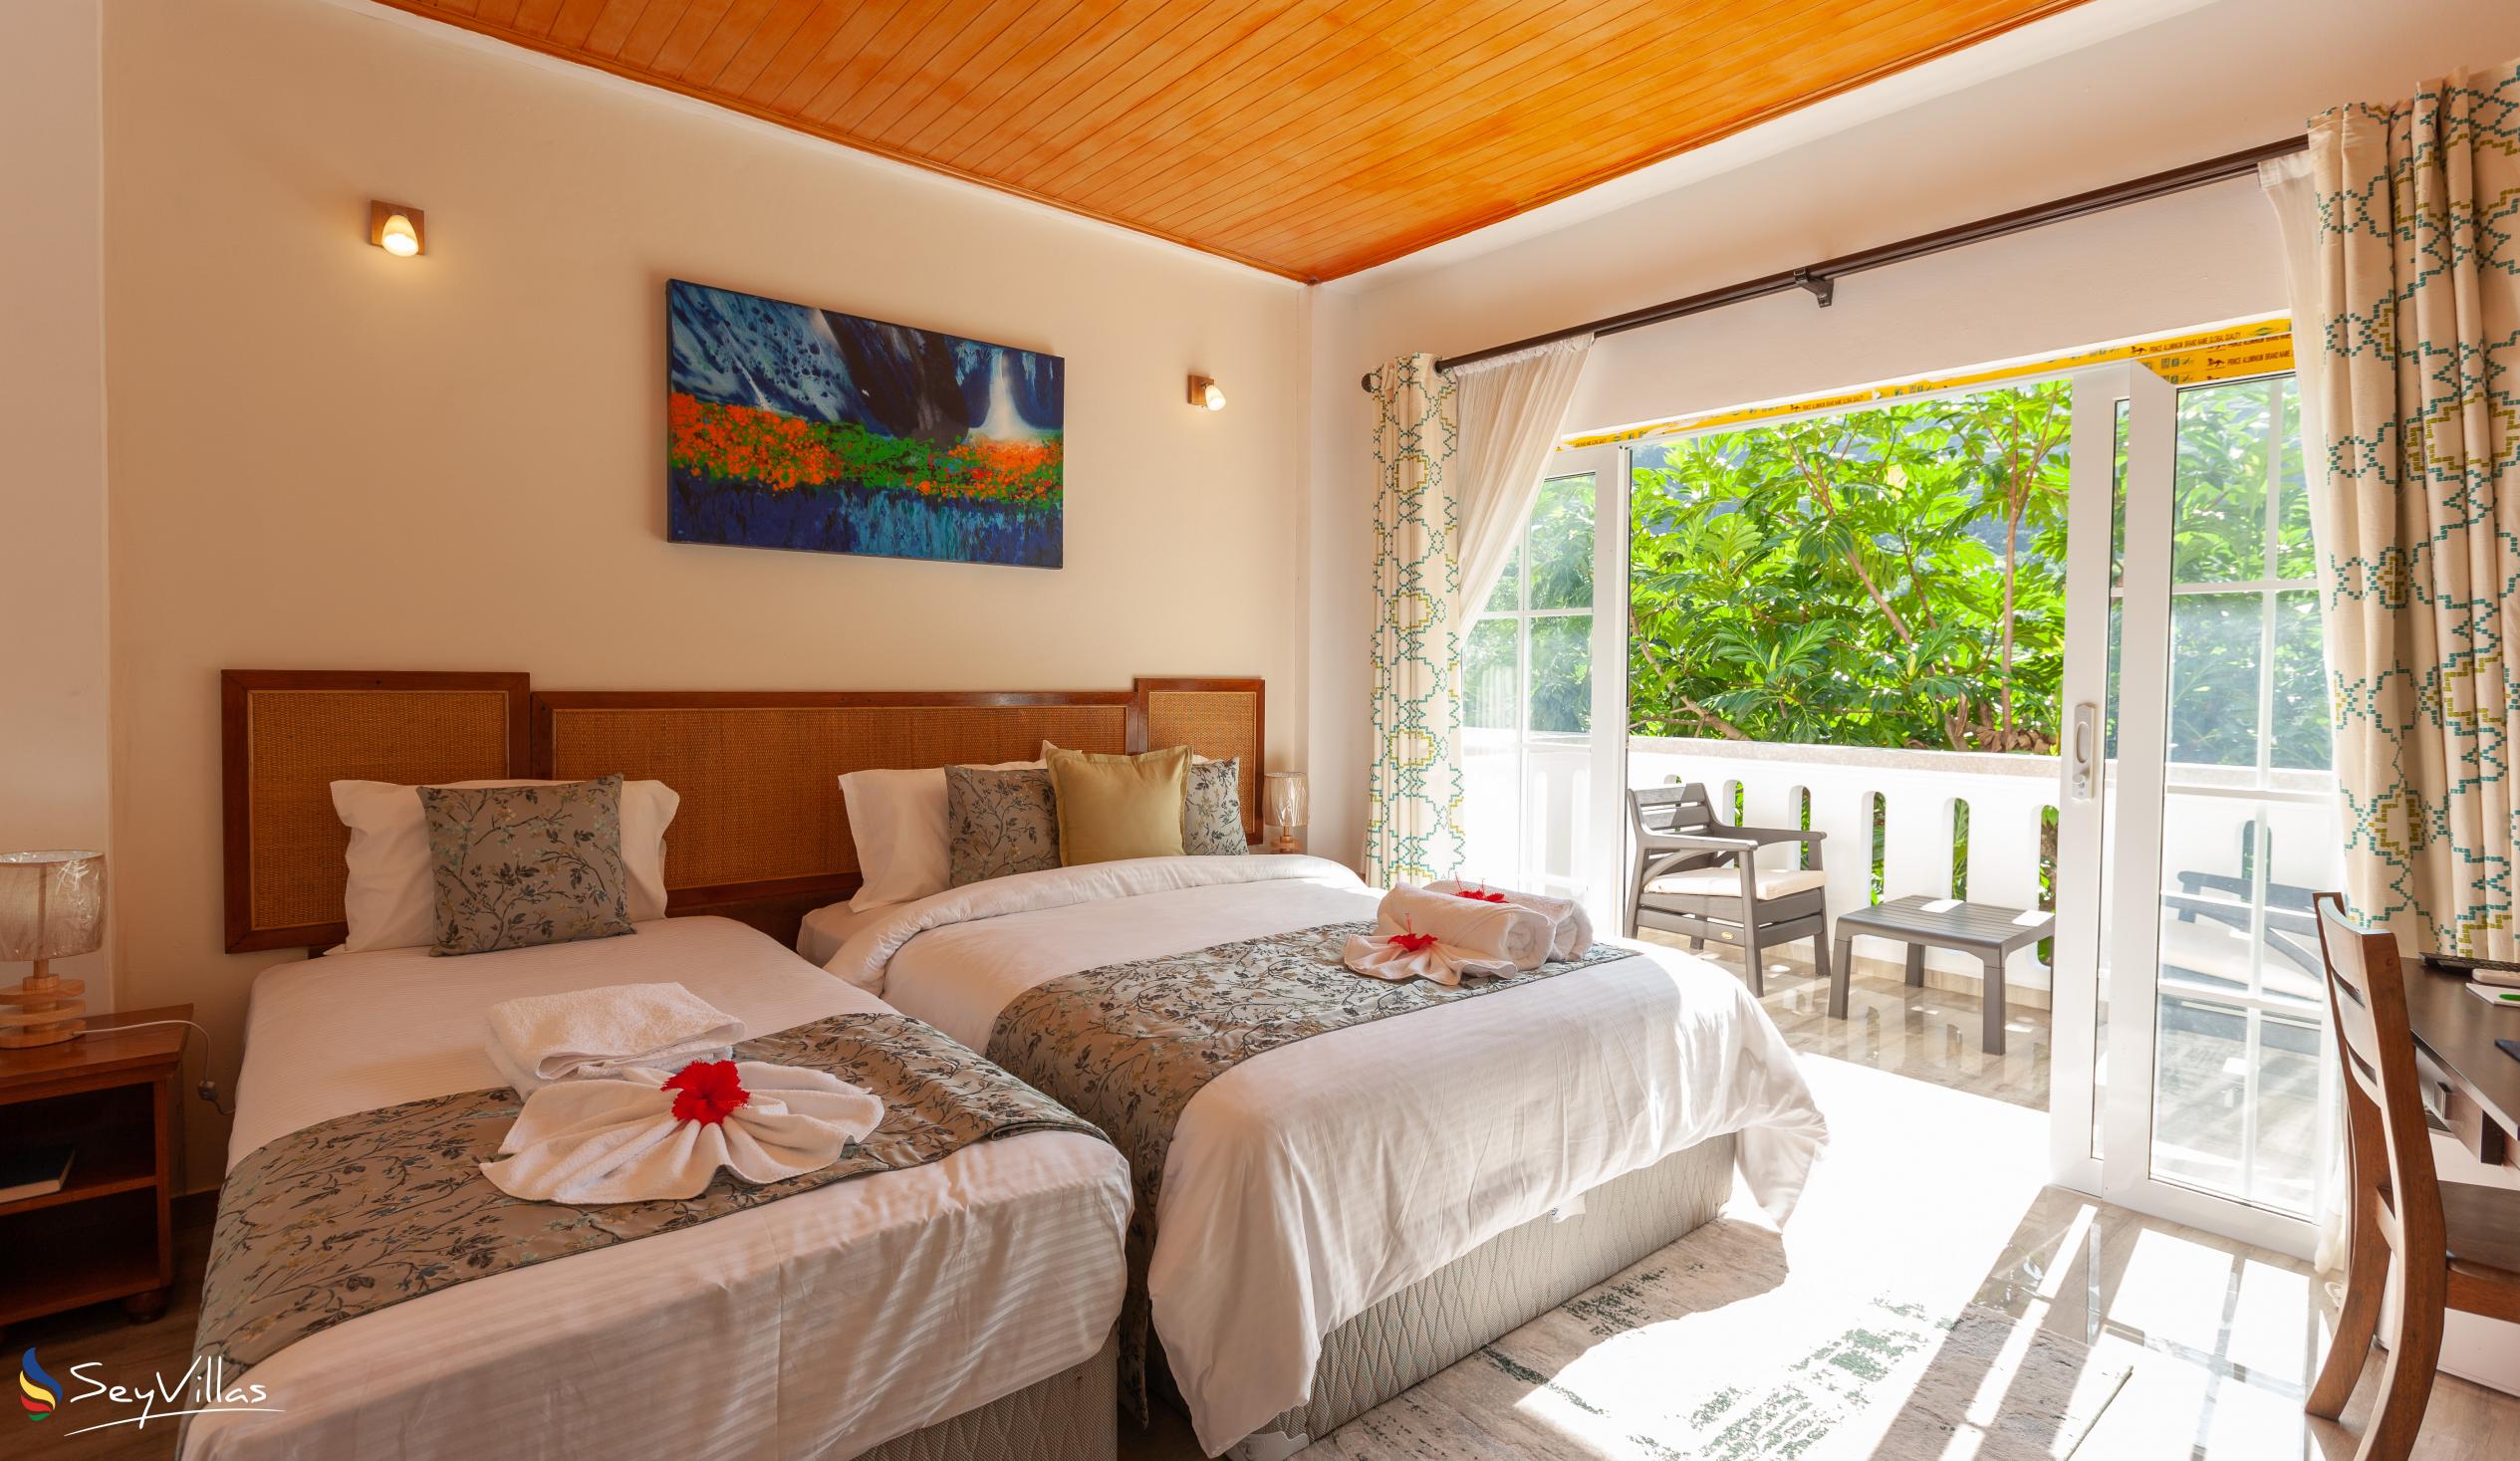 Foto 26: Mountain View Hotel - Chambre Familiale - La Digue (Seychelles)